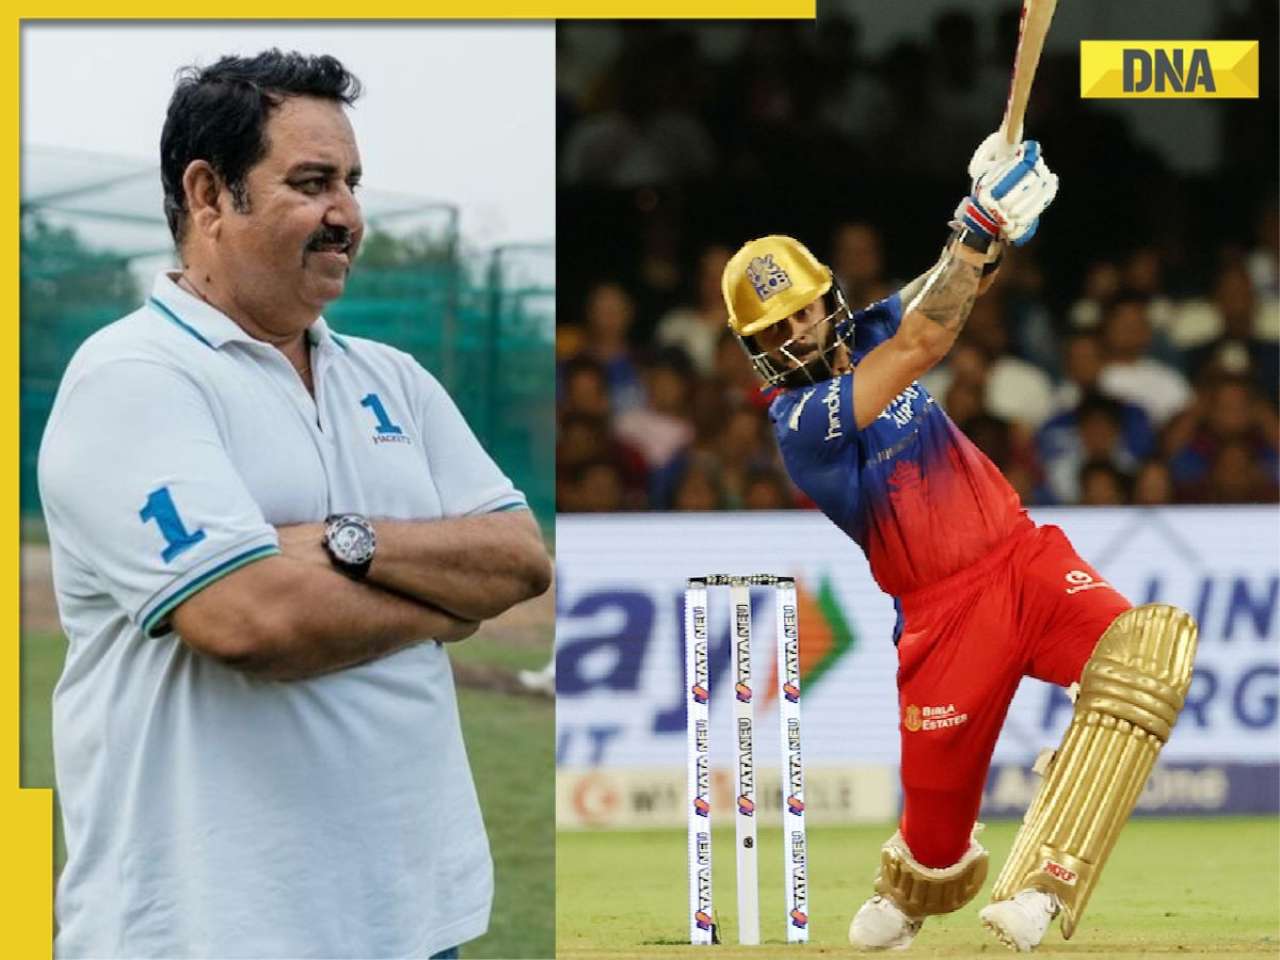 'Jisko cricket ka C nahi pata...': Virat Kohli's childhood coach slams critics over batter's IPL strike-rate